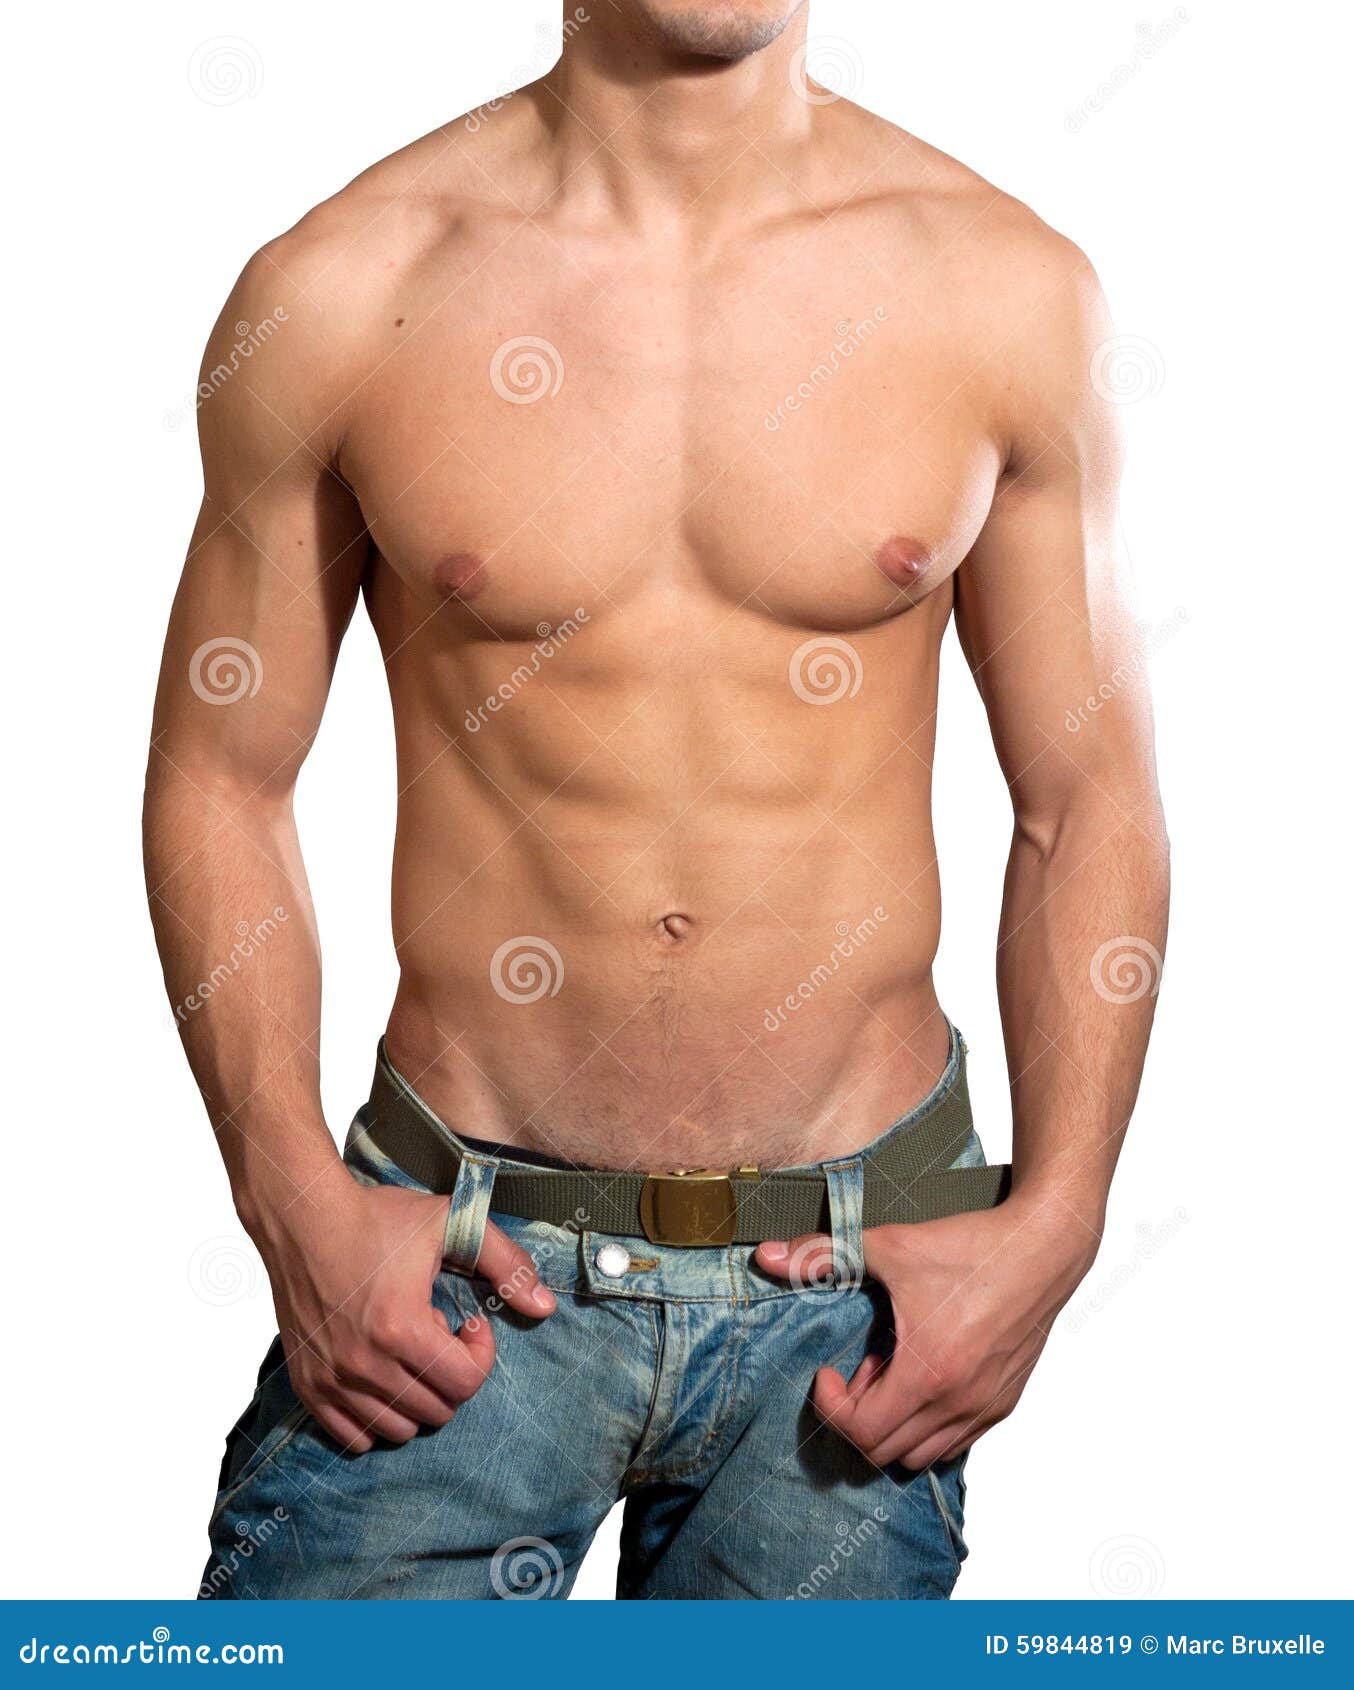 мужская грудь картинки фото 65